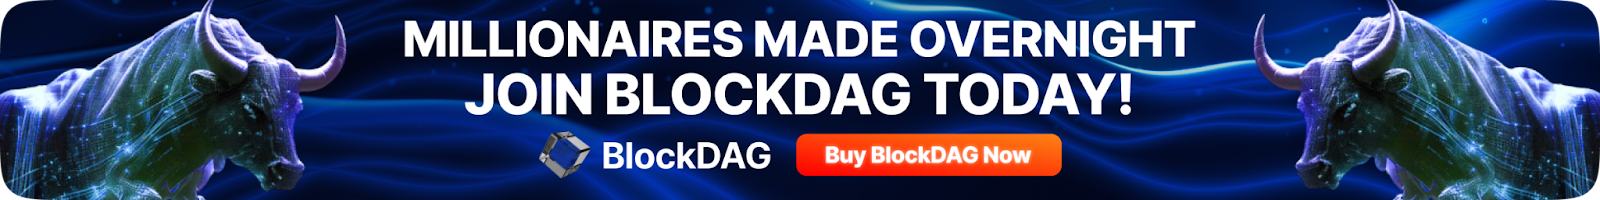 BlockDAG Skyrockets 700%: Updated DashBoard Turns Investors into Whales Ahead of Retik Finance’s Launch 